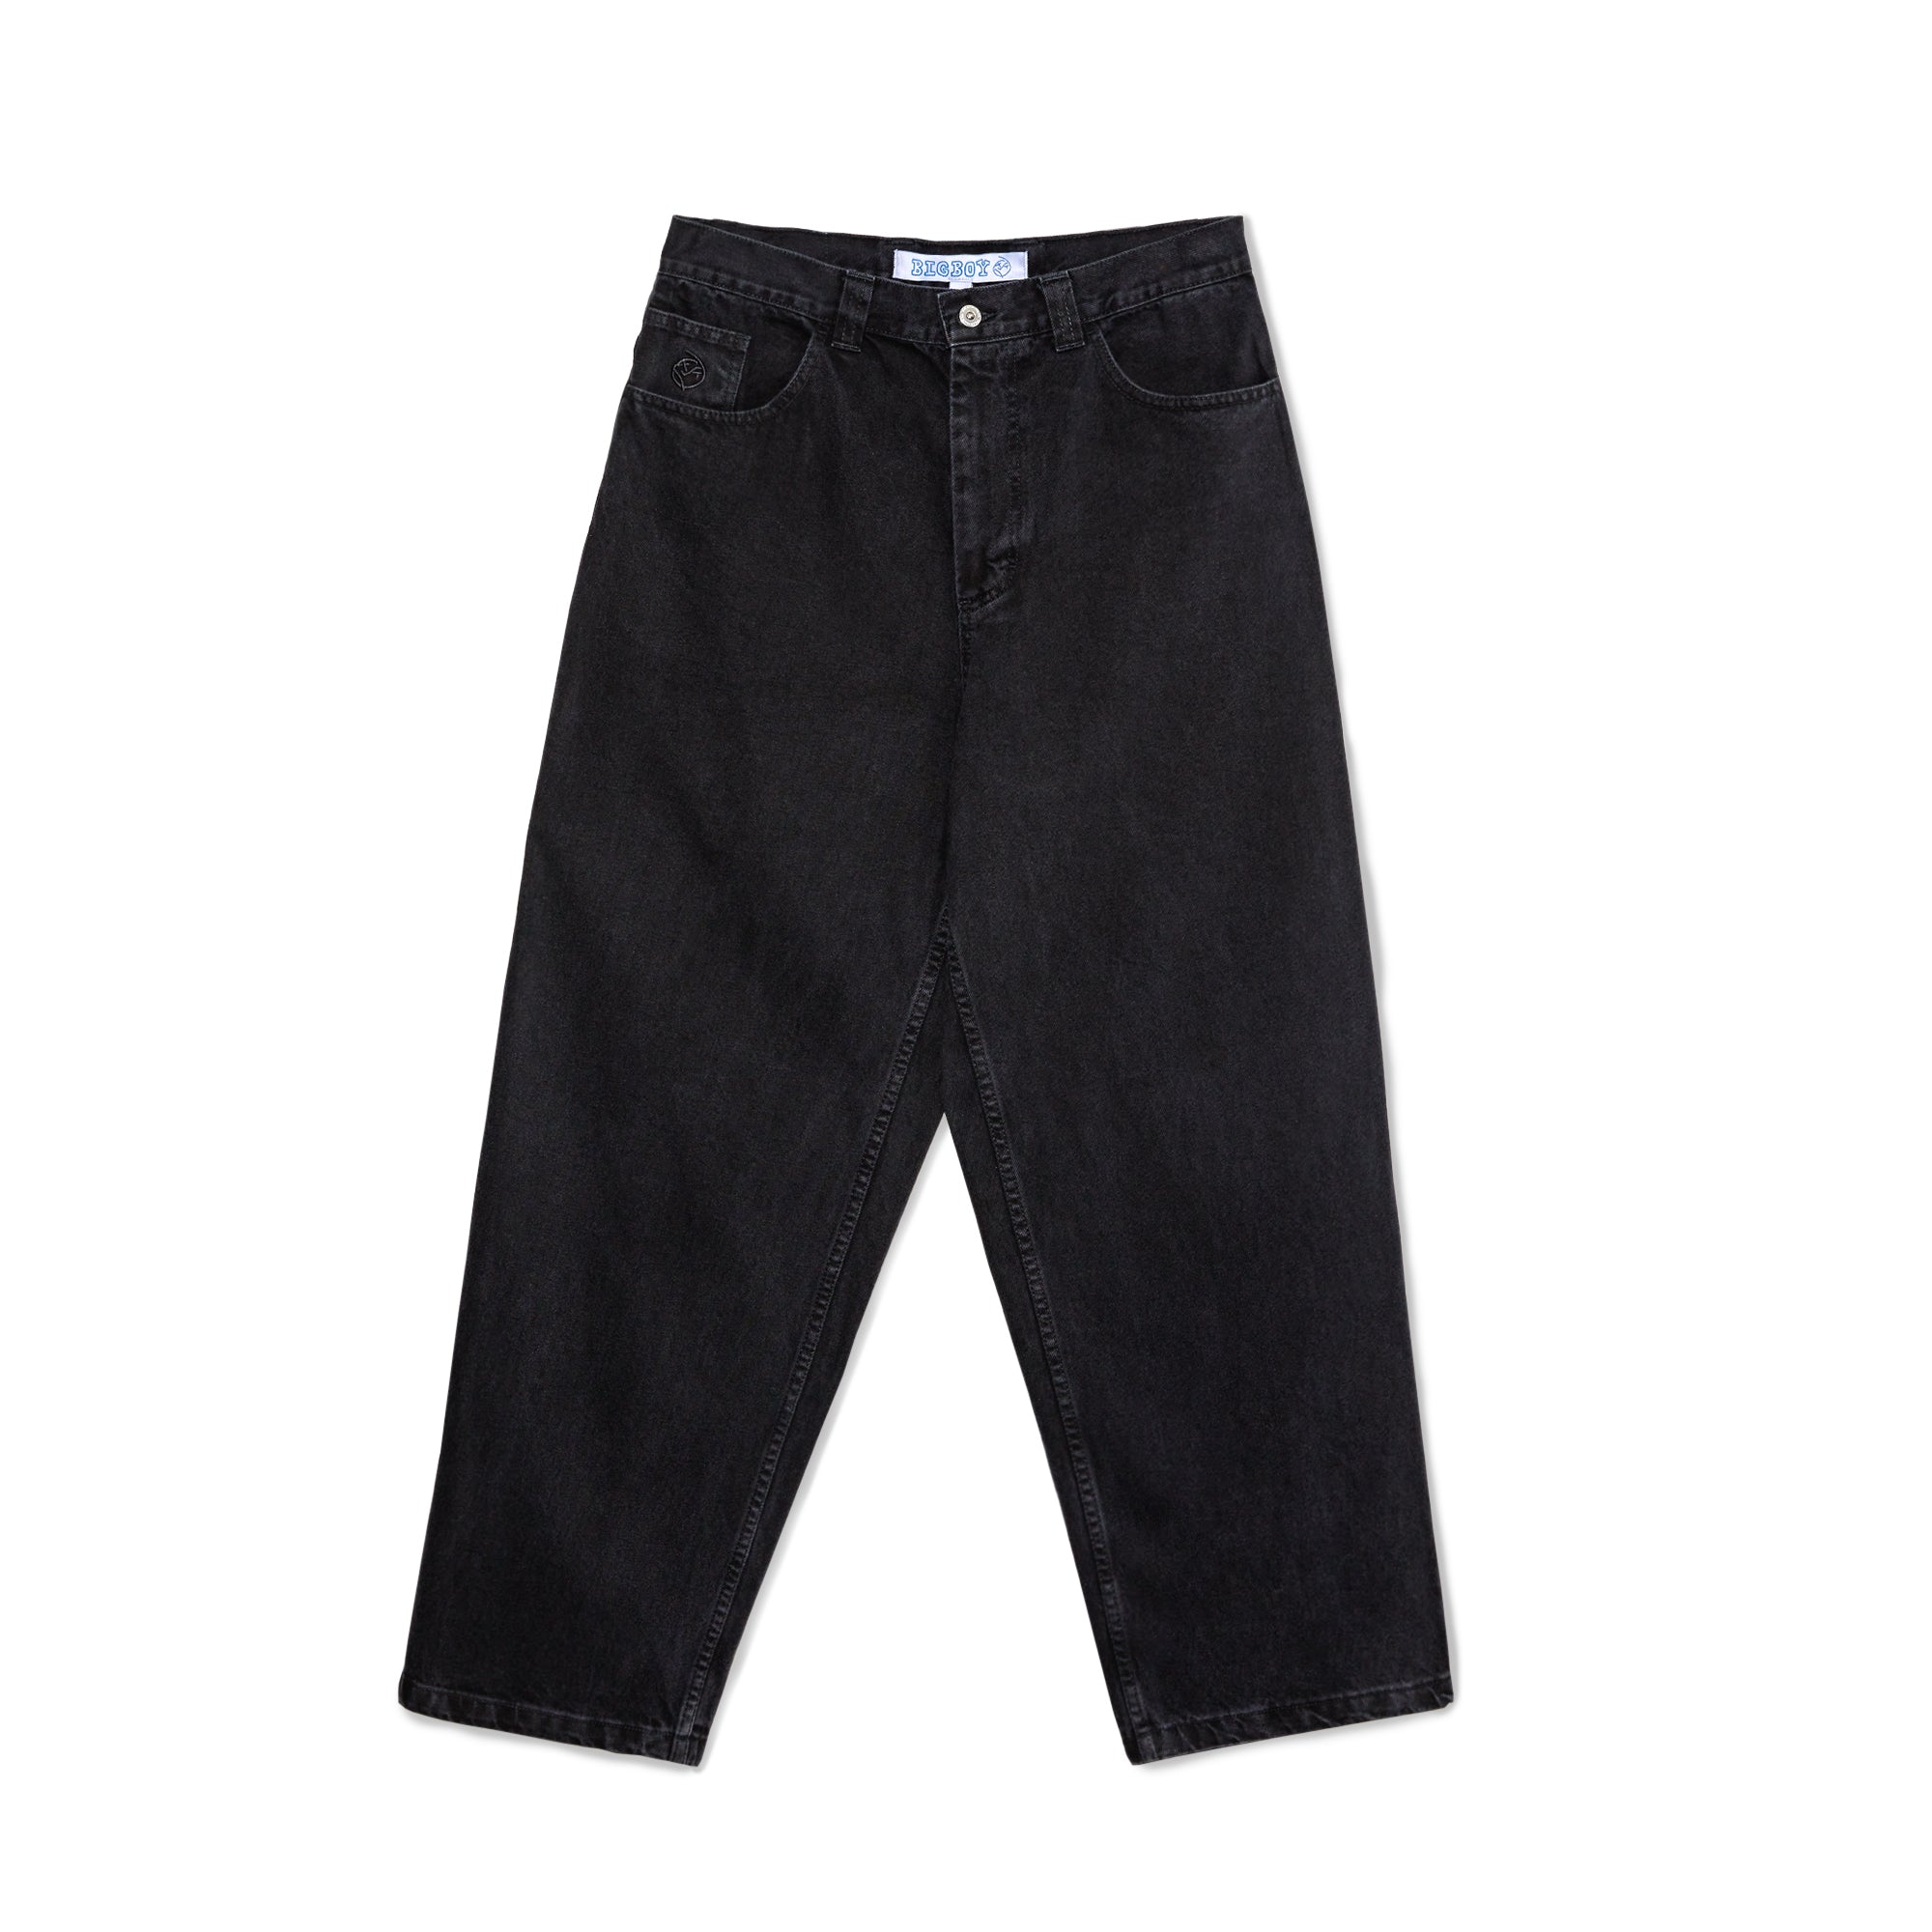 POLAR - Big Boy Jeans "Pitch Black"